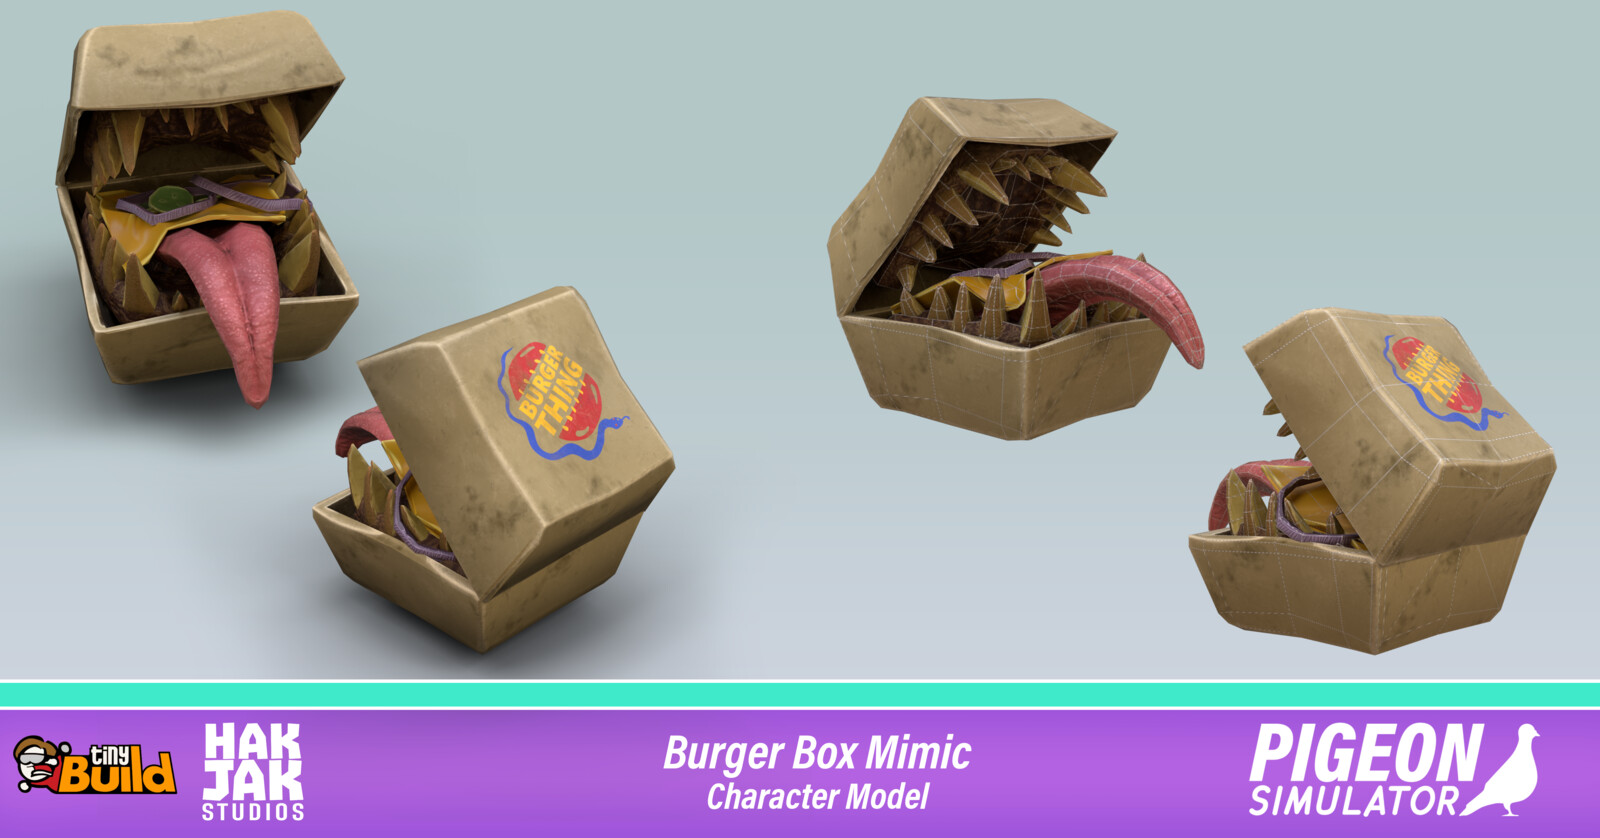 "Bungus" the Burger Mimic - Character Model